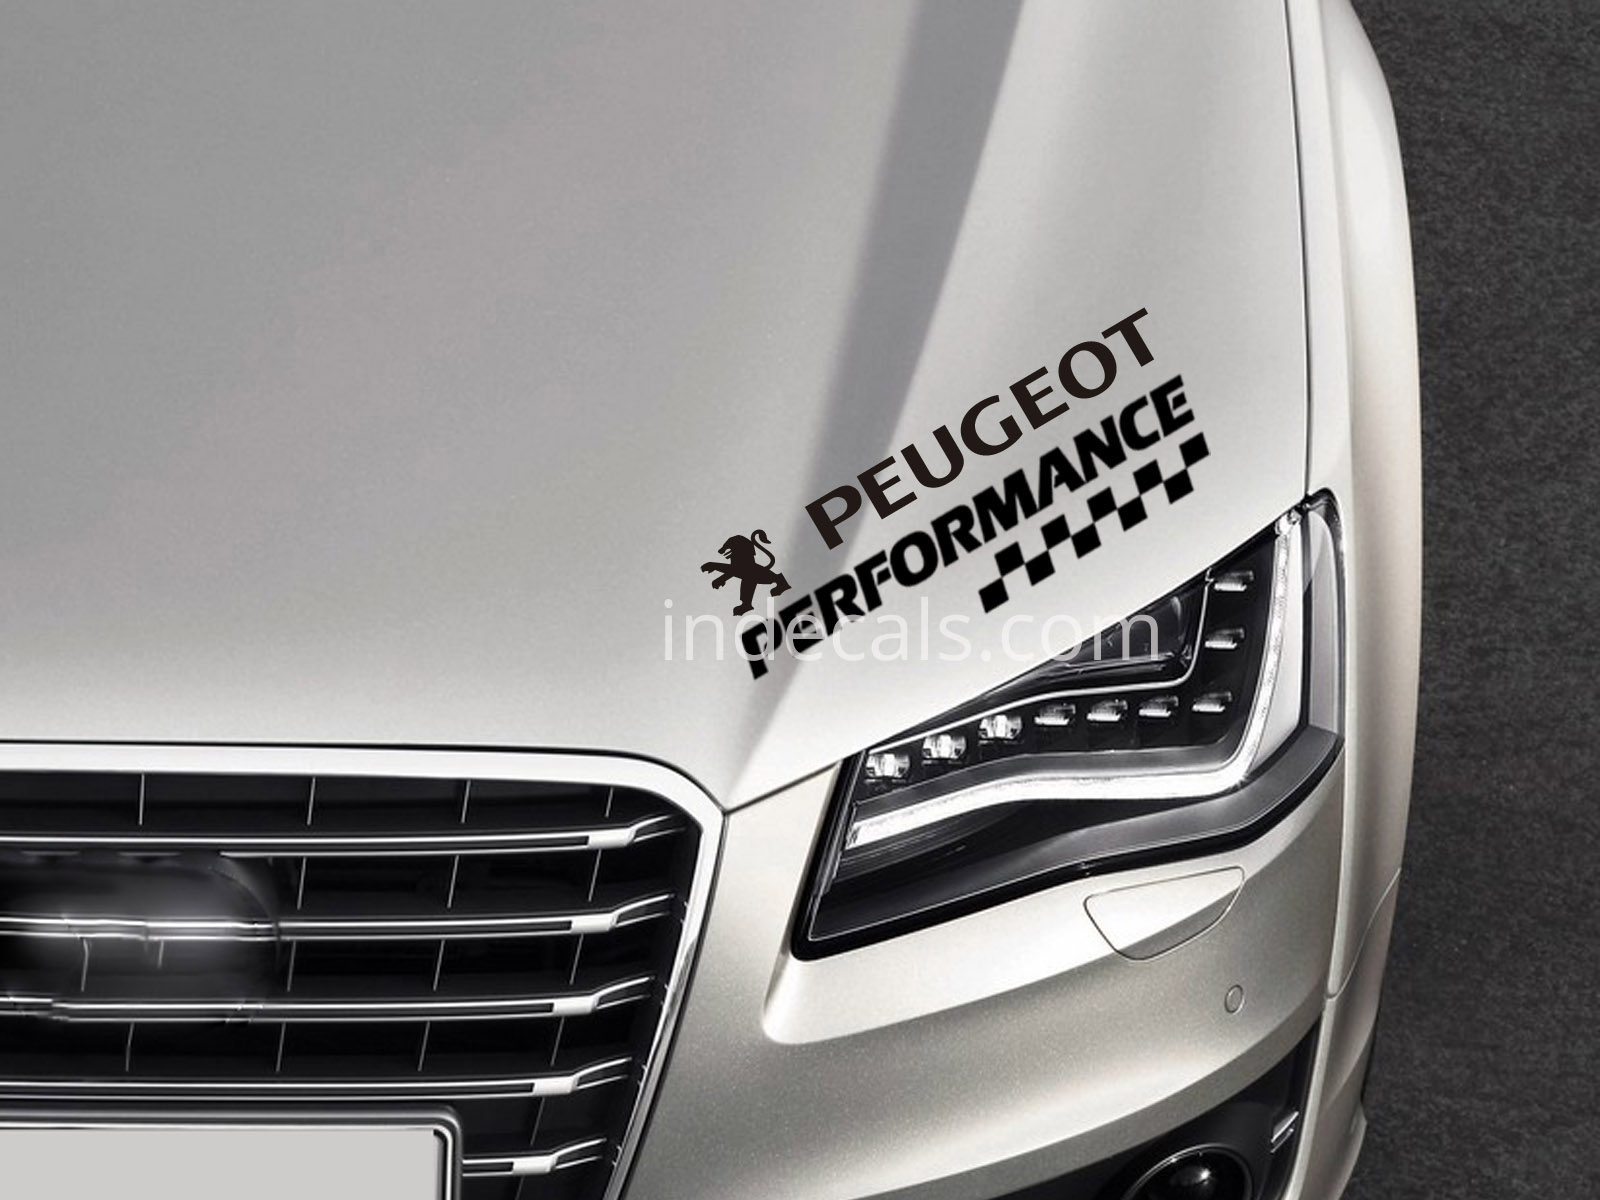 1 x Peugeot Performance Sticker - Black